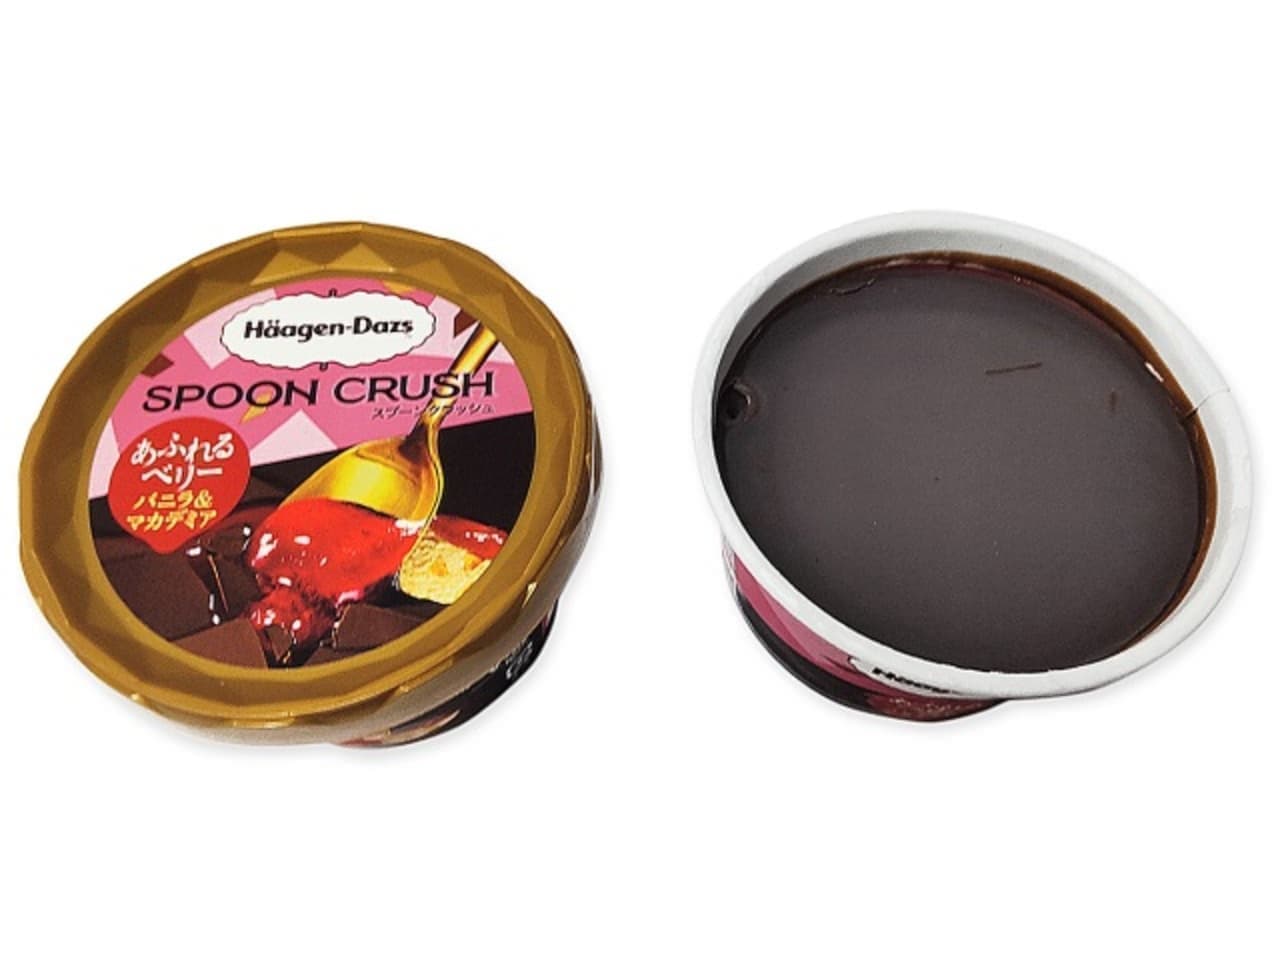 7-Eleven "HD Spoon Crush Overflowing Berry Vanilla & Macadamia"